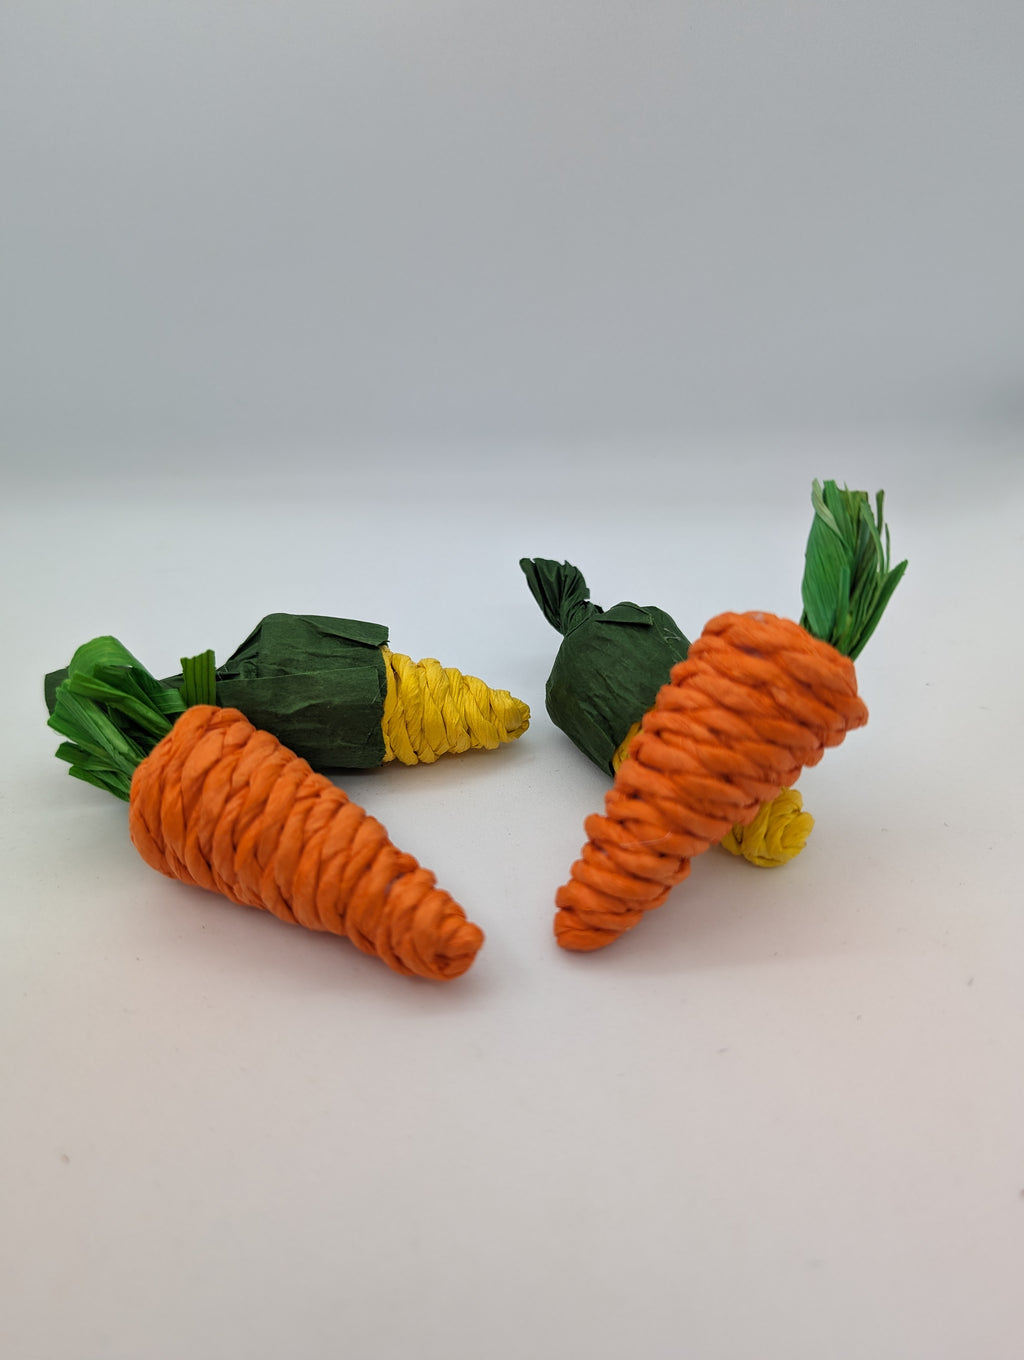 4 Piece Carrot Set